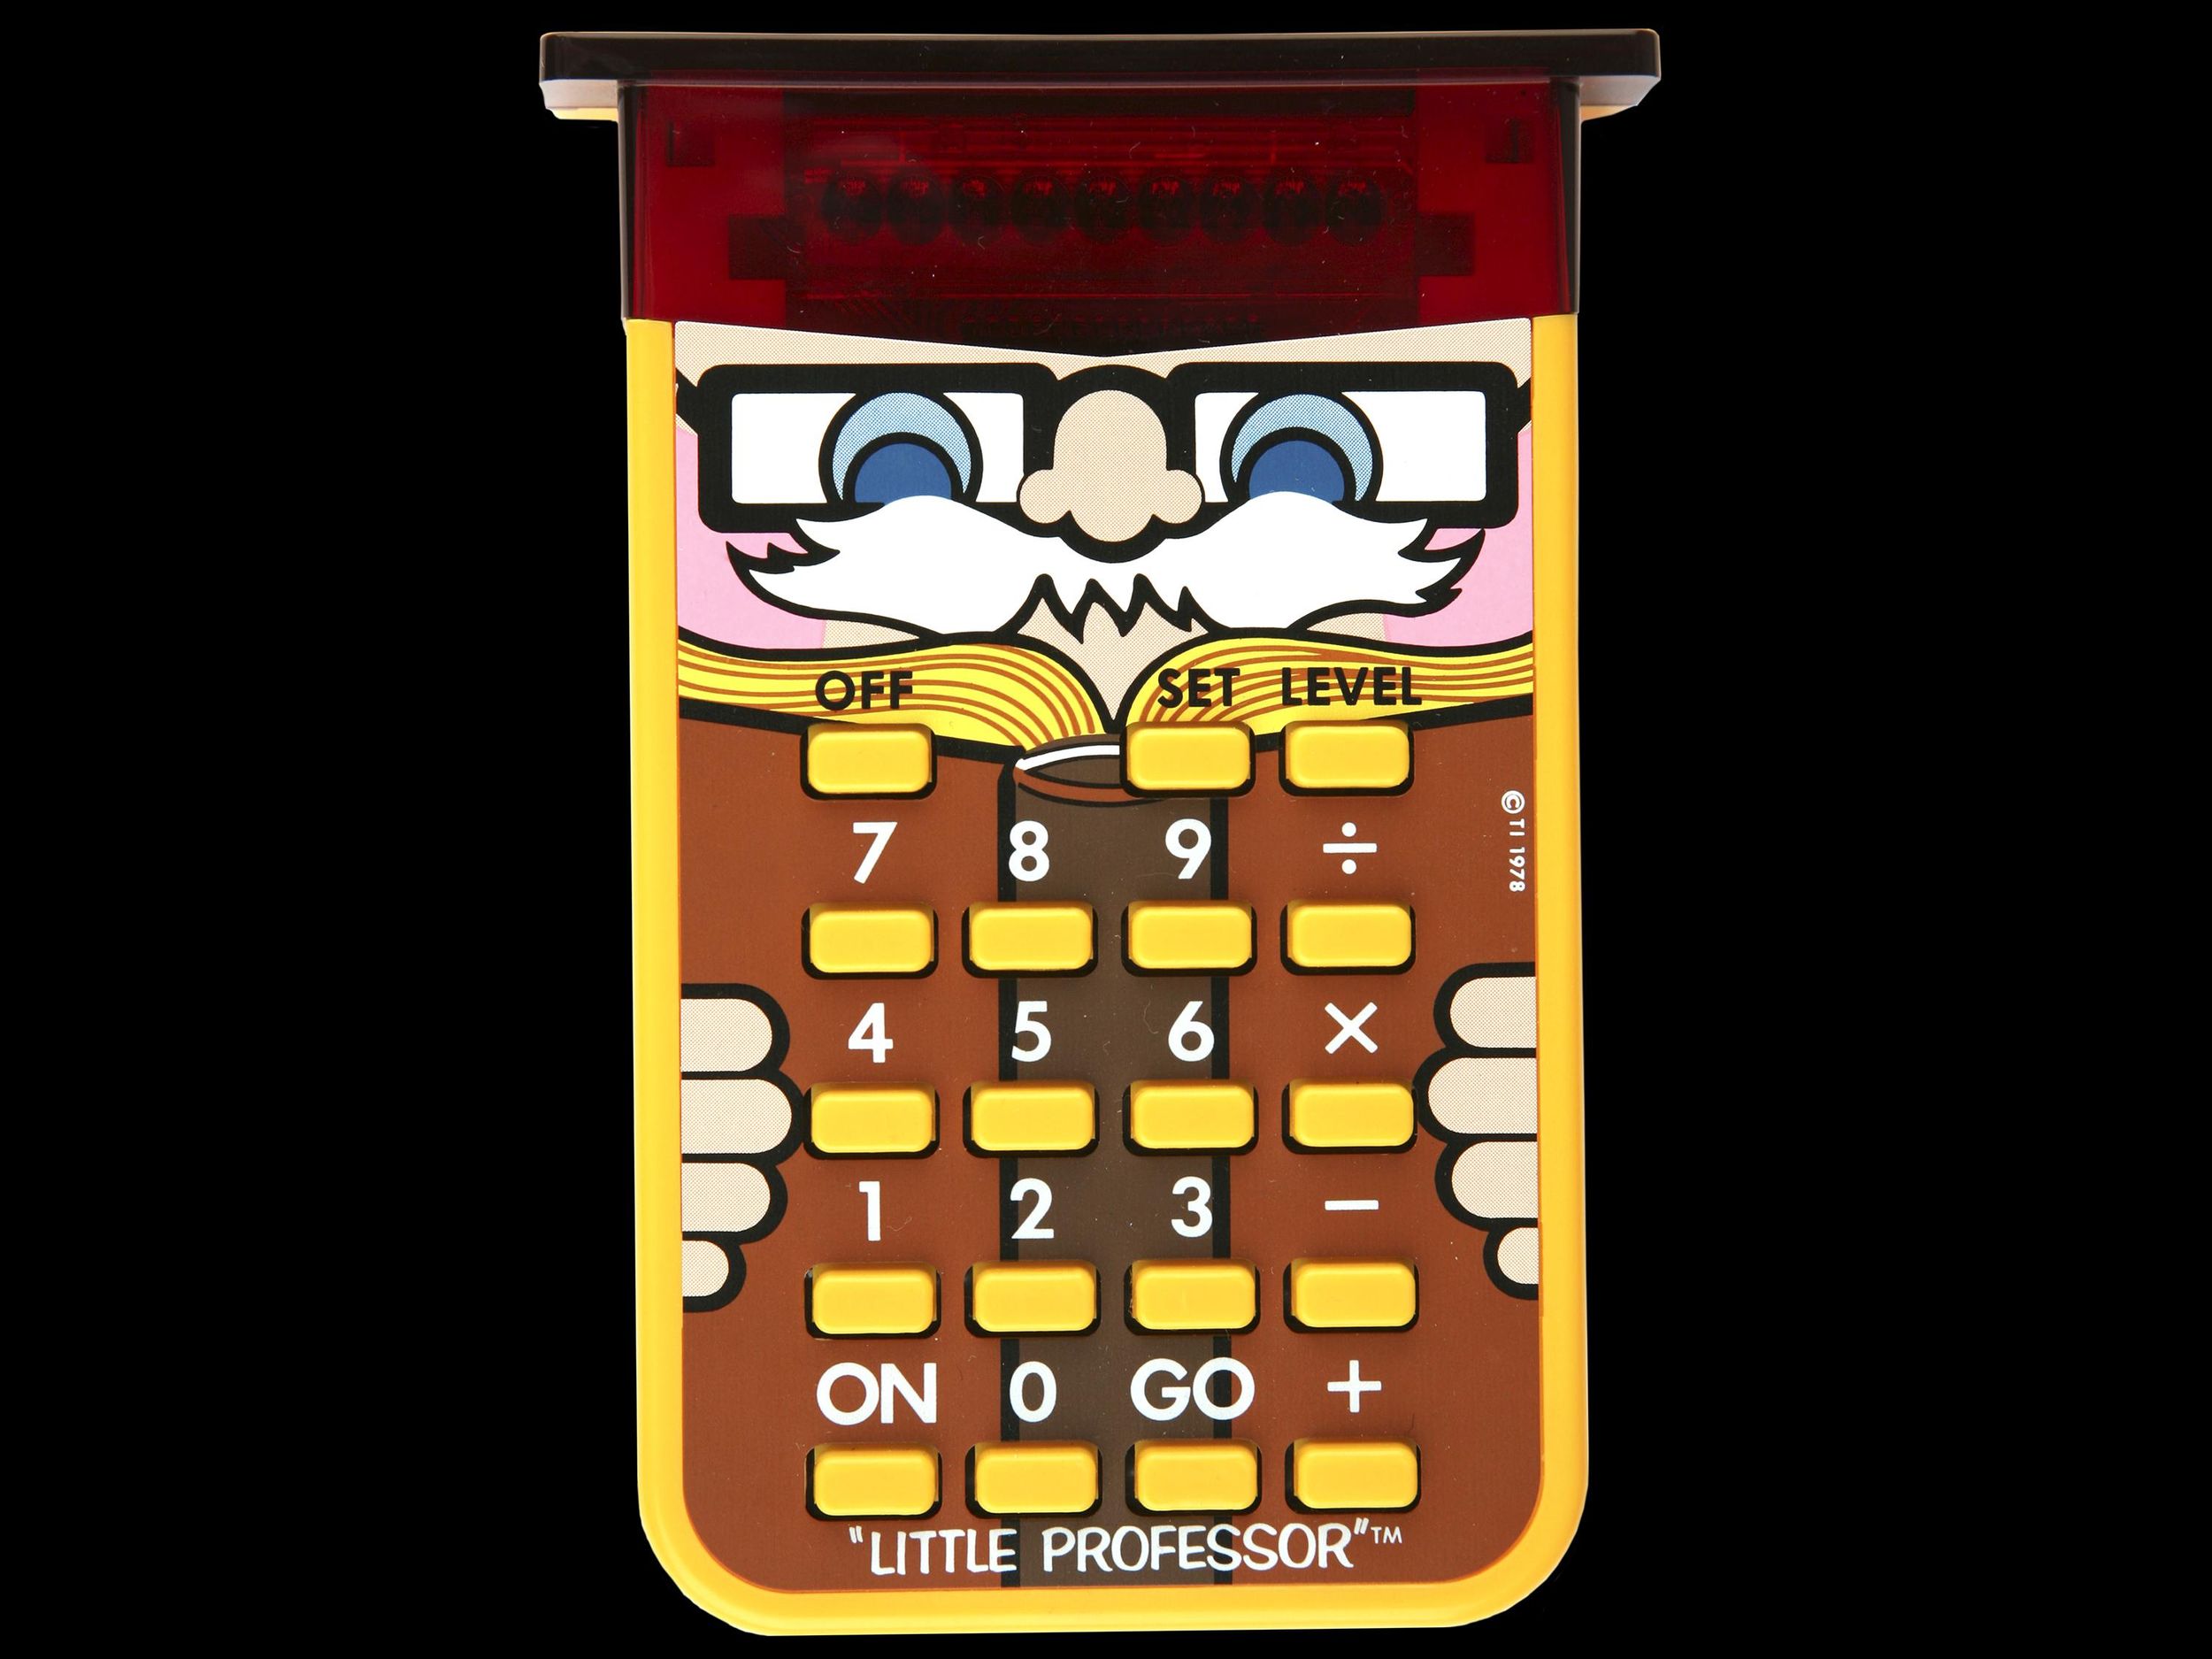 A photo of a Little Professor calculator.